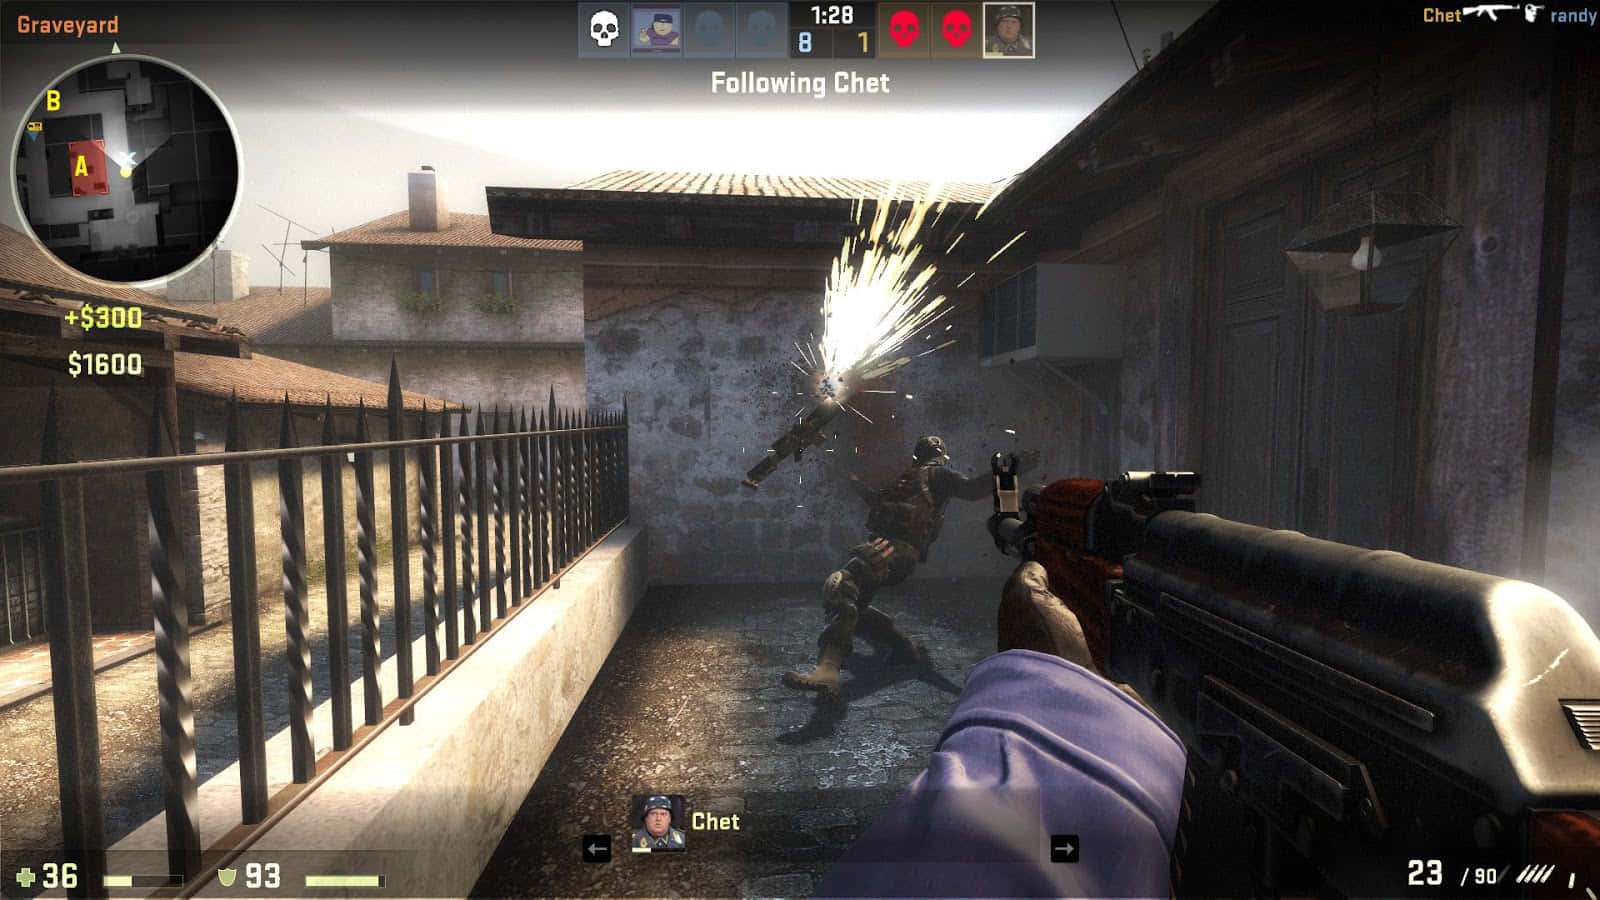 A Screenshot Of A Game With A Gun And A Gun